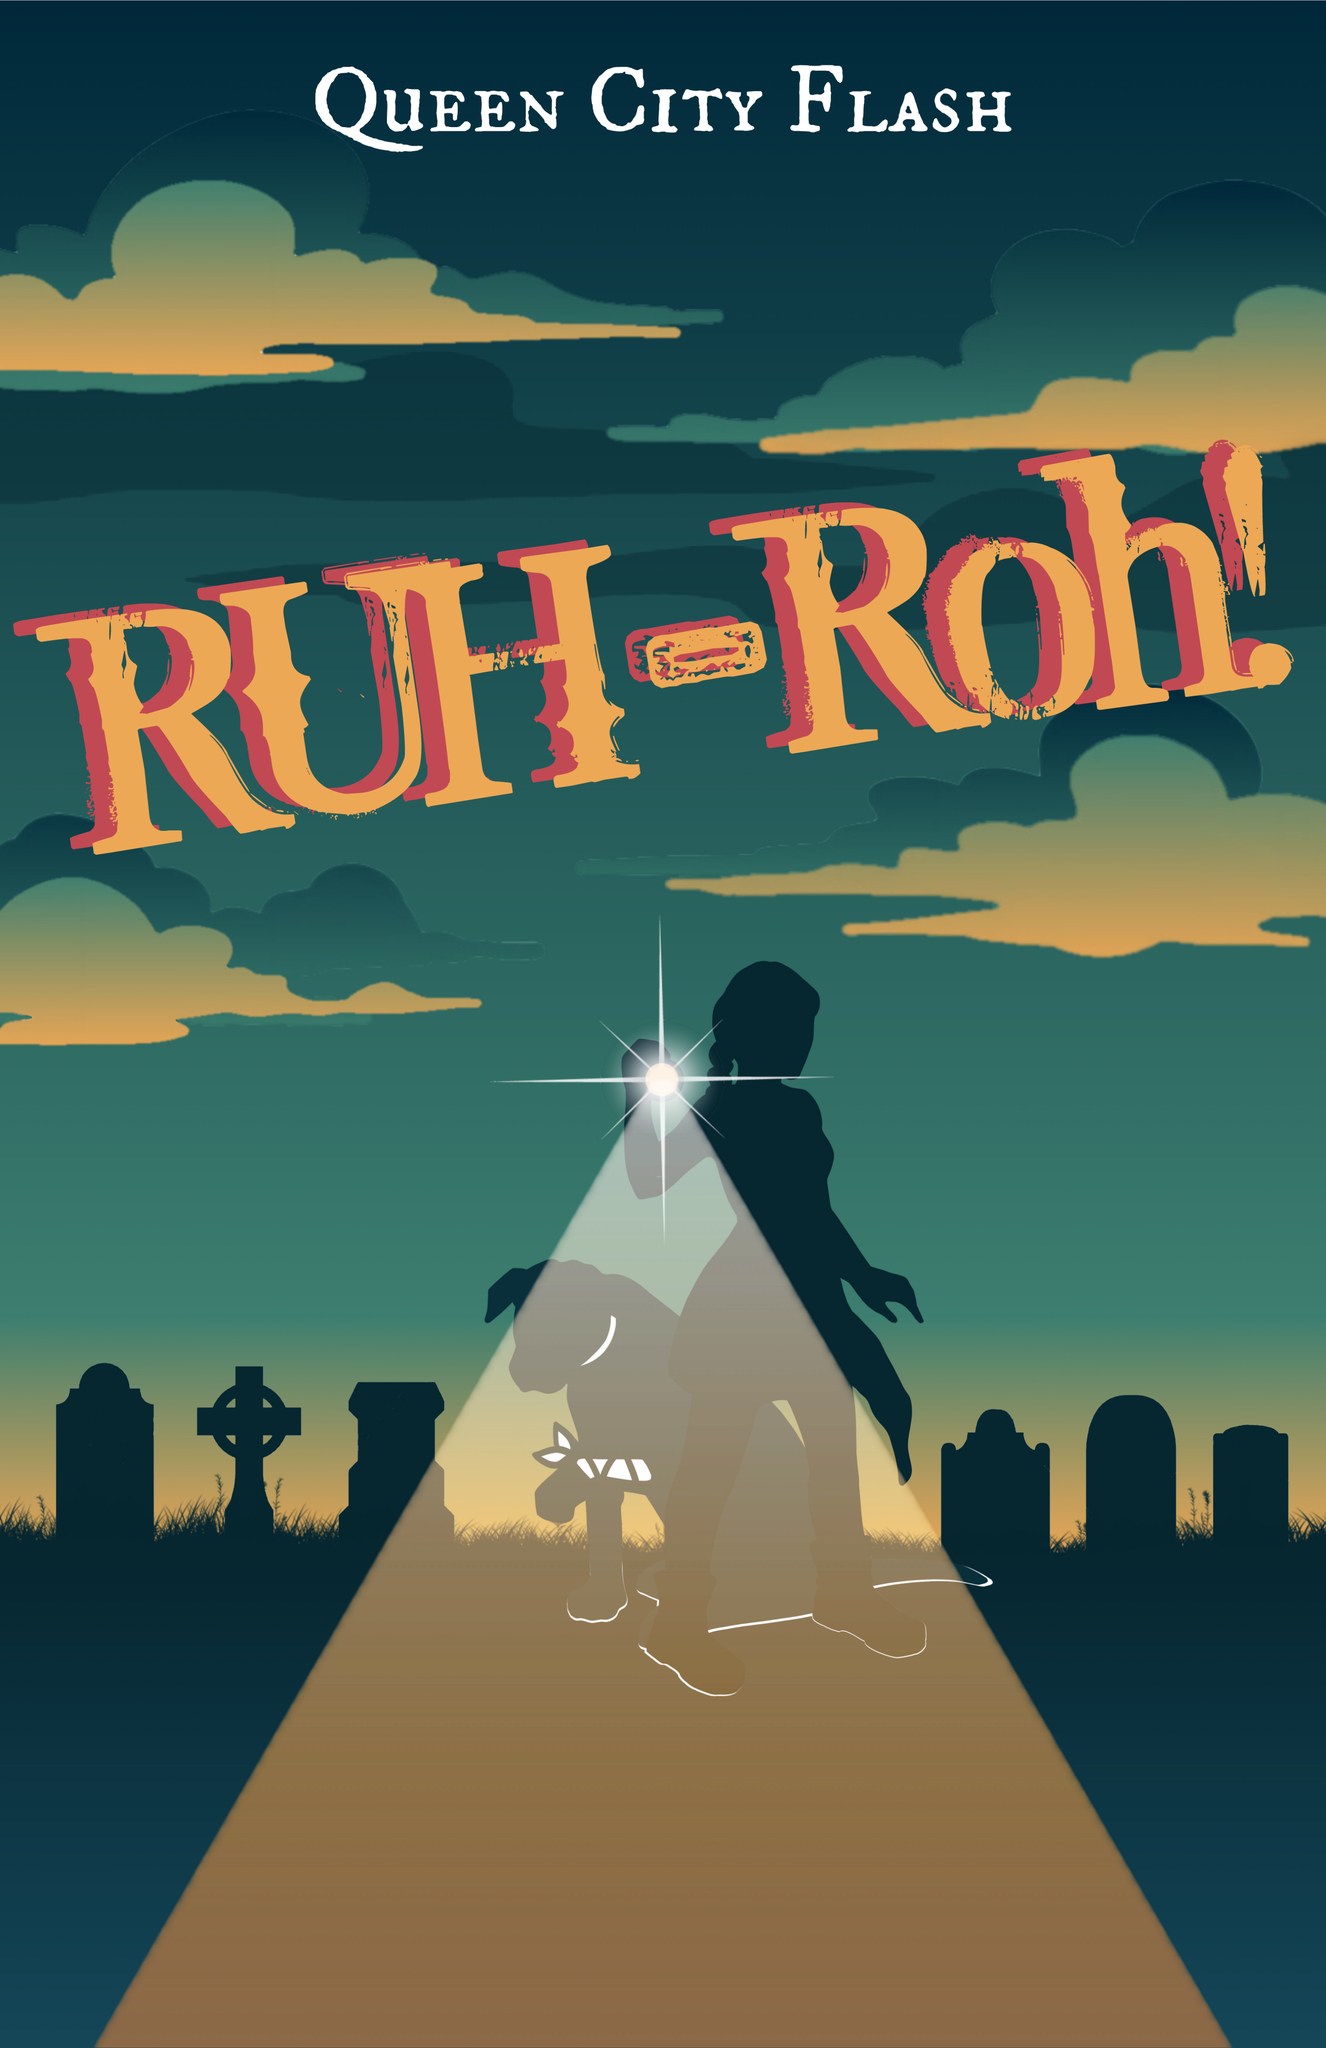 RUH-Roh! Poster for Cincinnati Fringe Festival